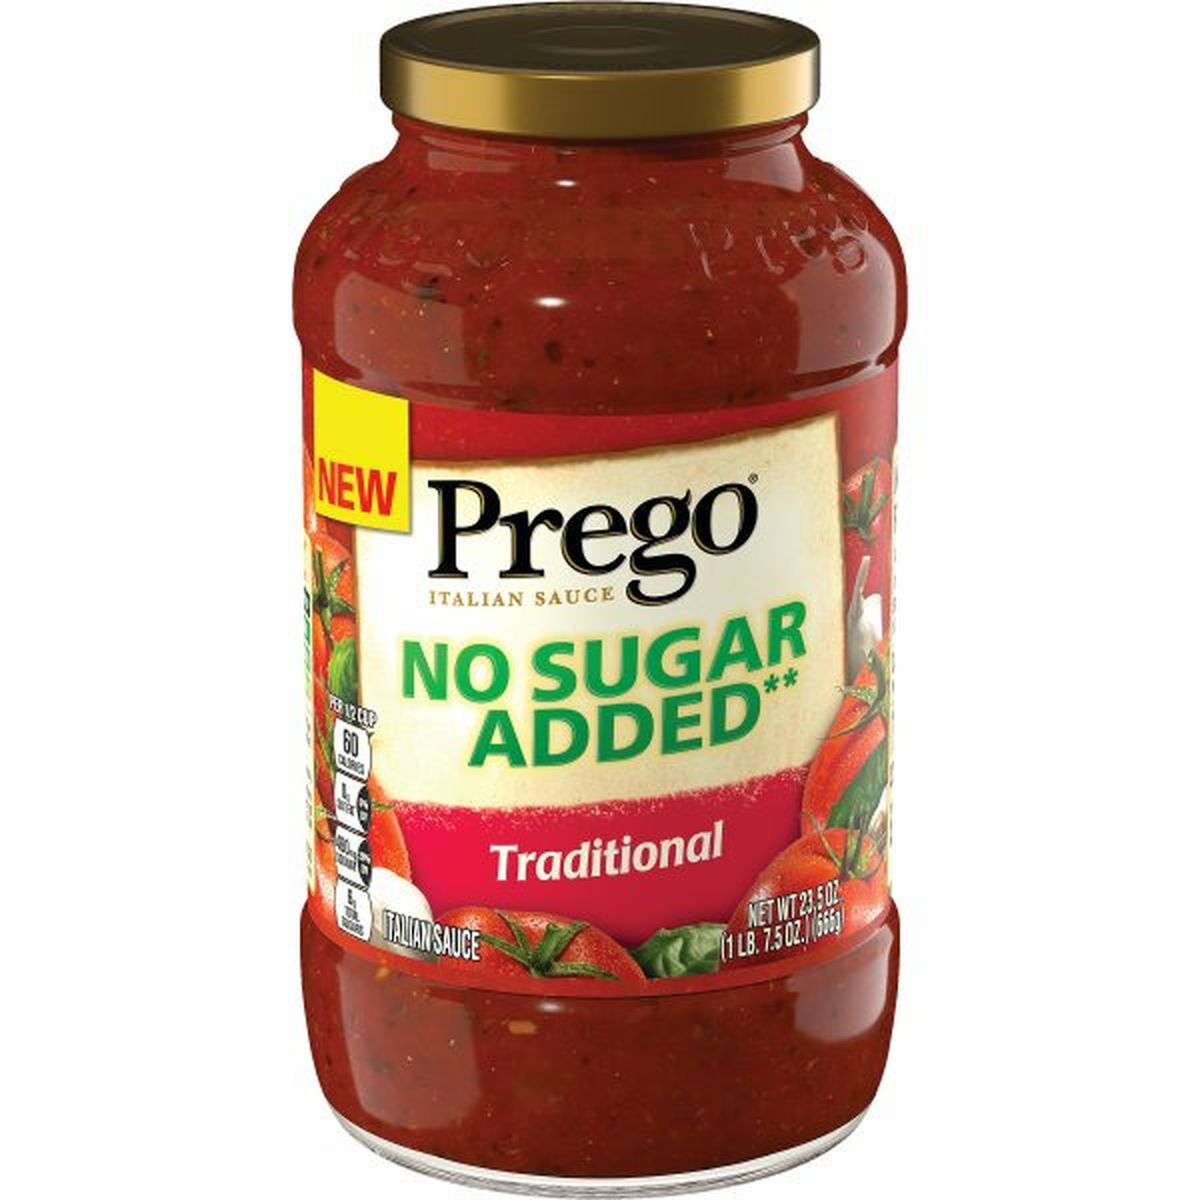 Calories in Pregos No Sugar Added Traditional Italian Sauce